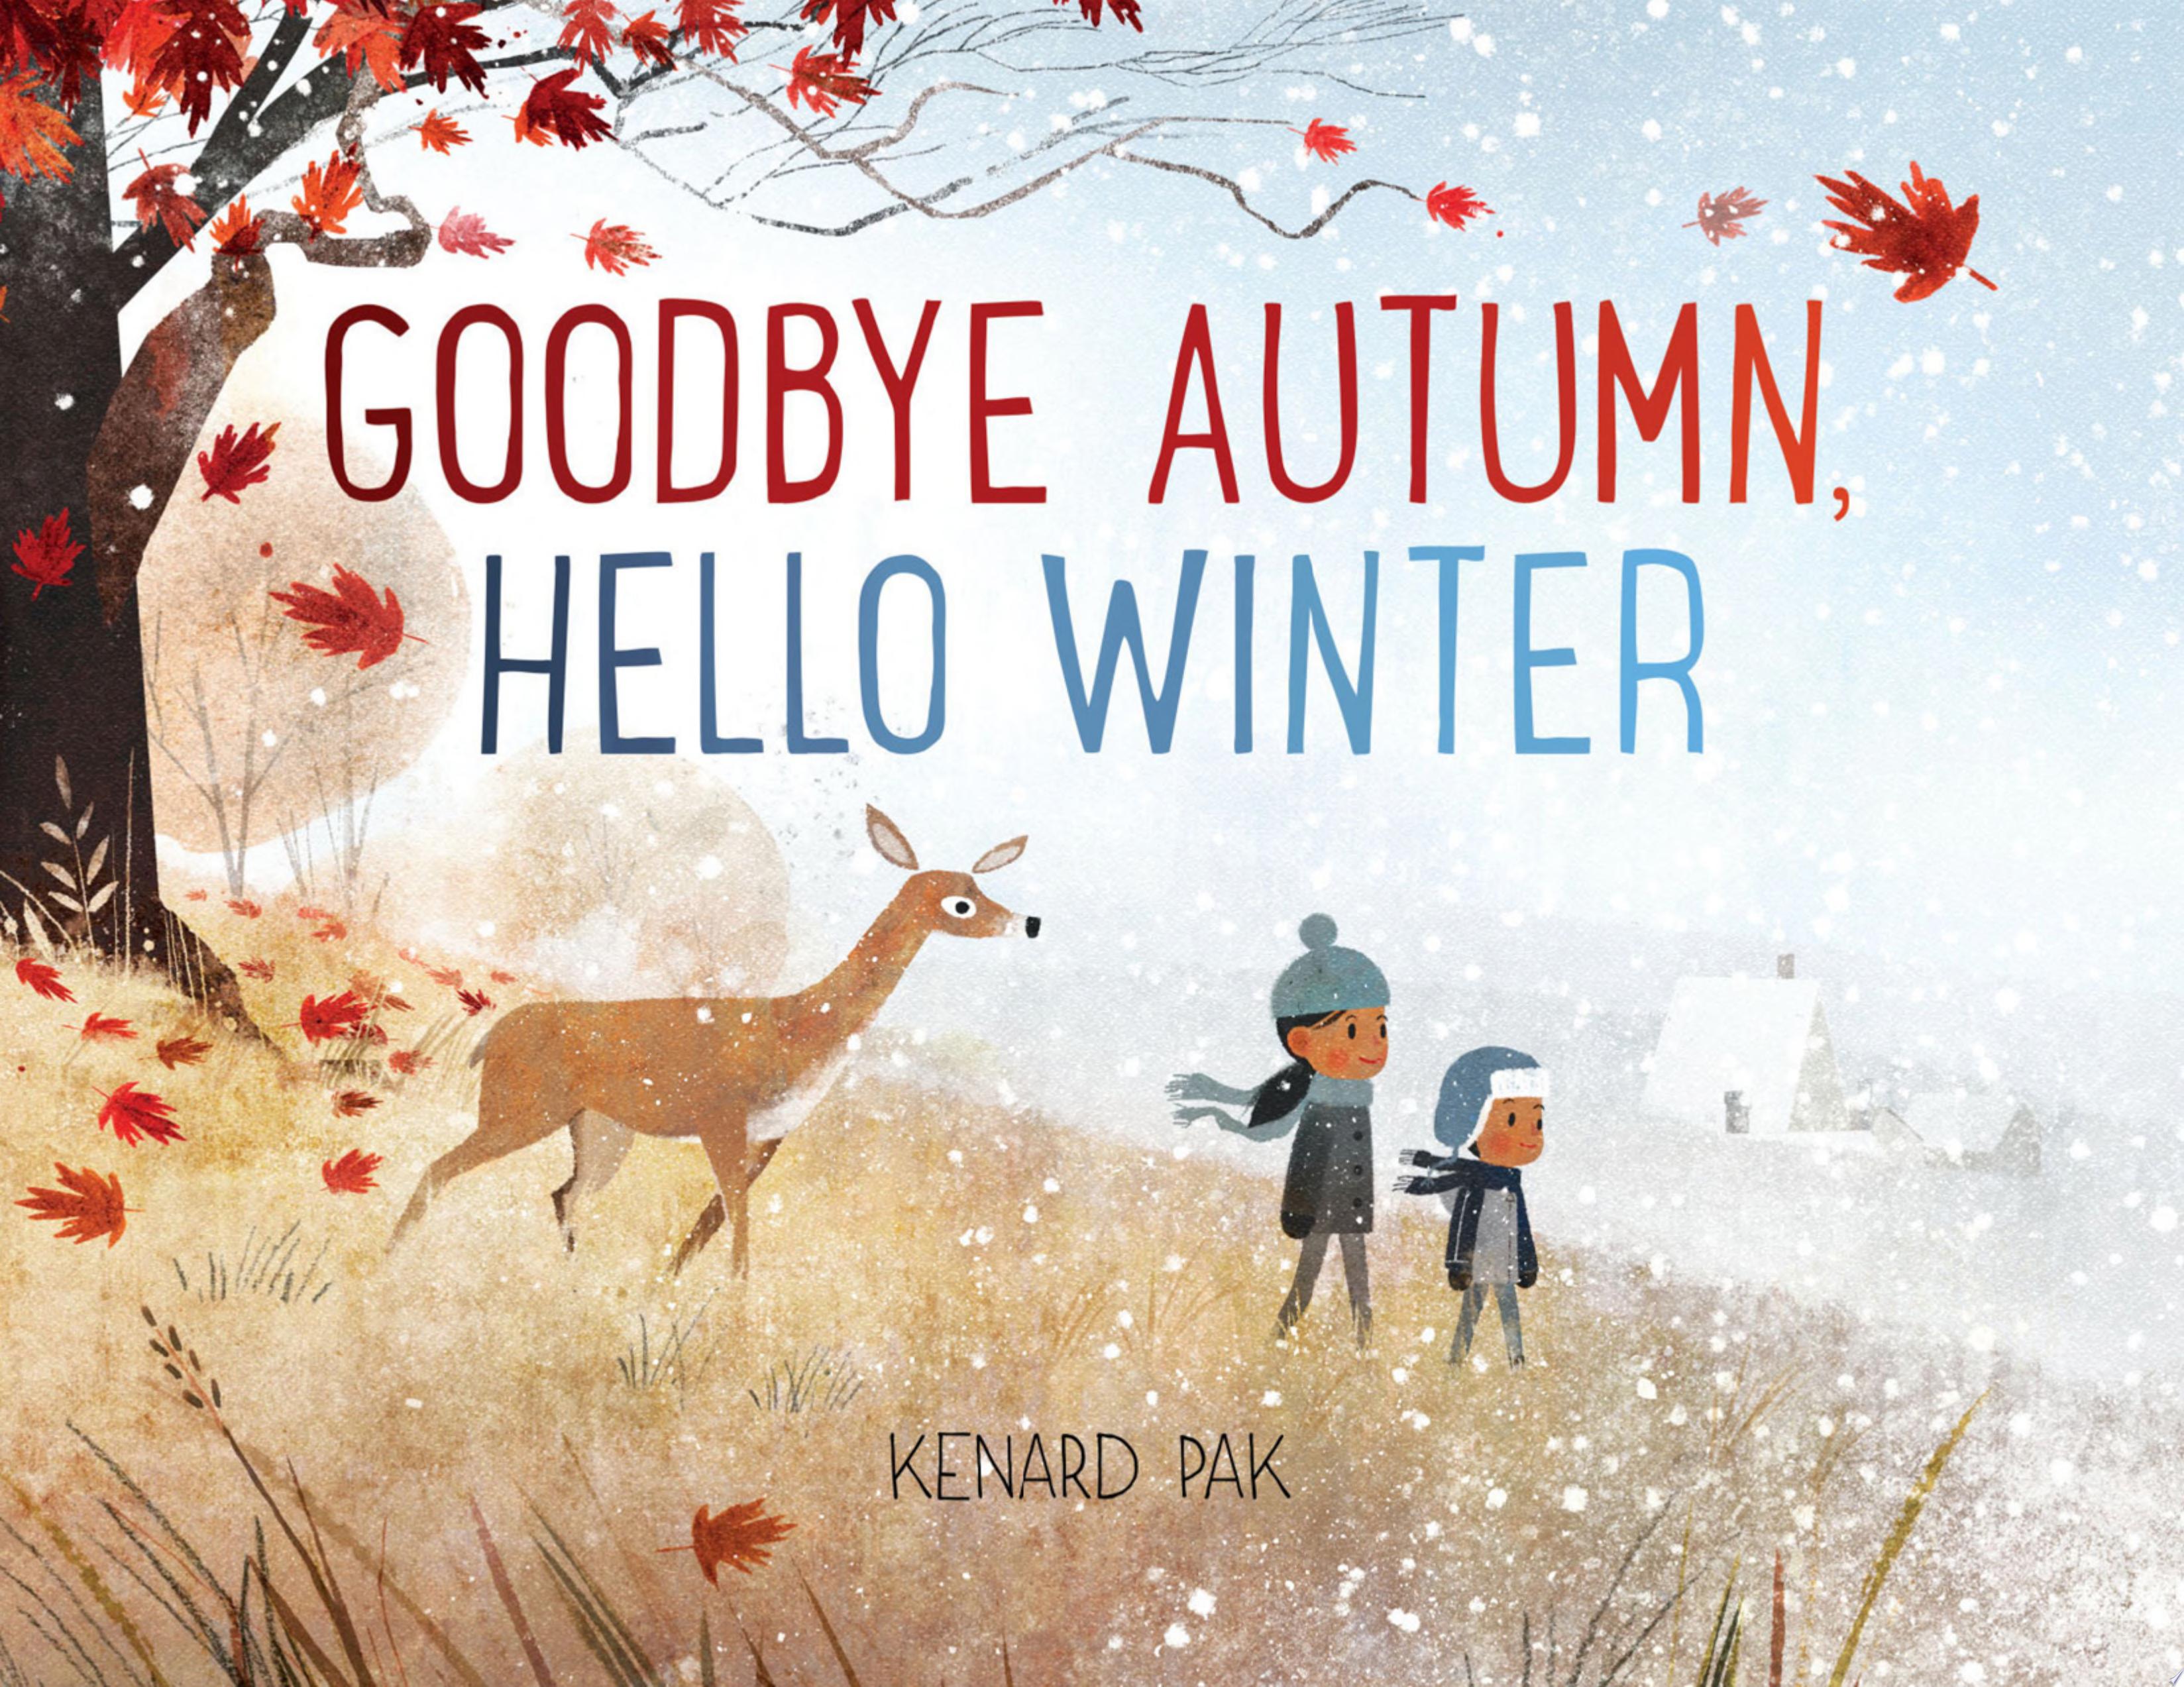 Image for "Goodbye Autumn, Hello Winter"